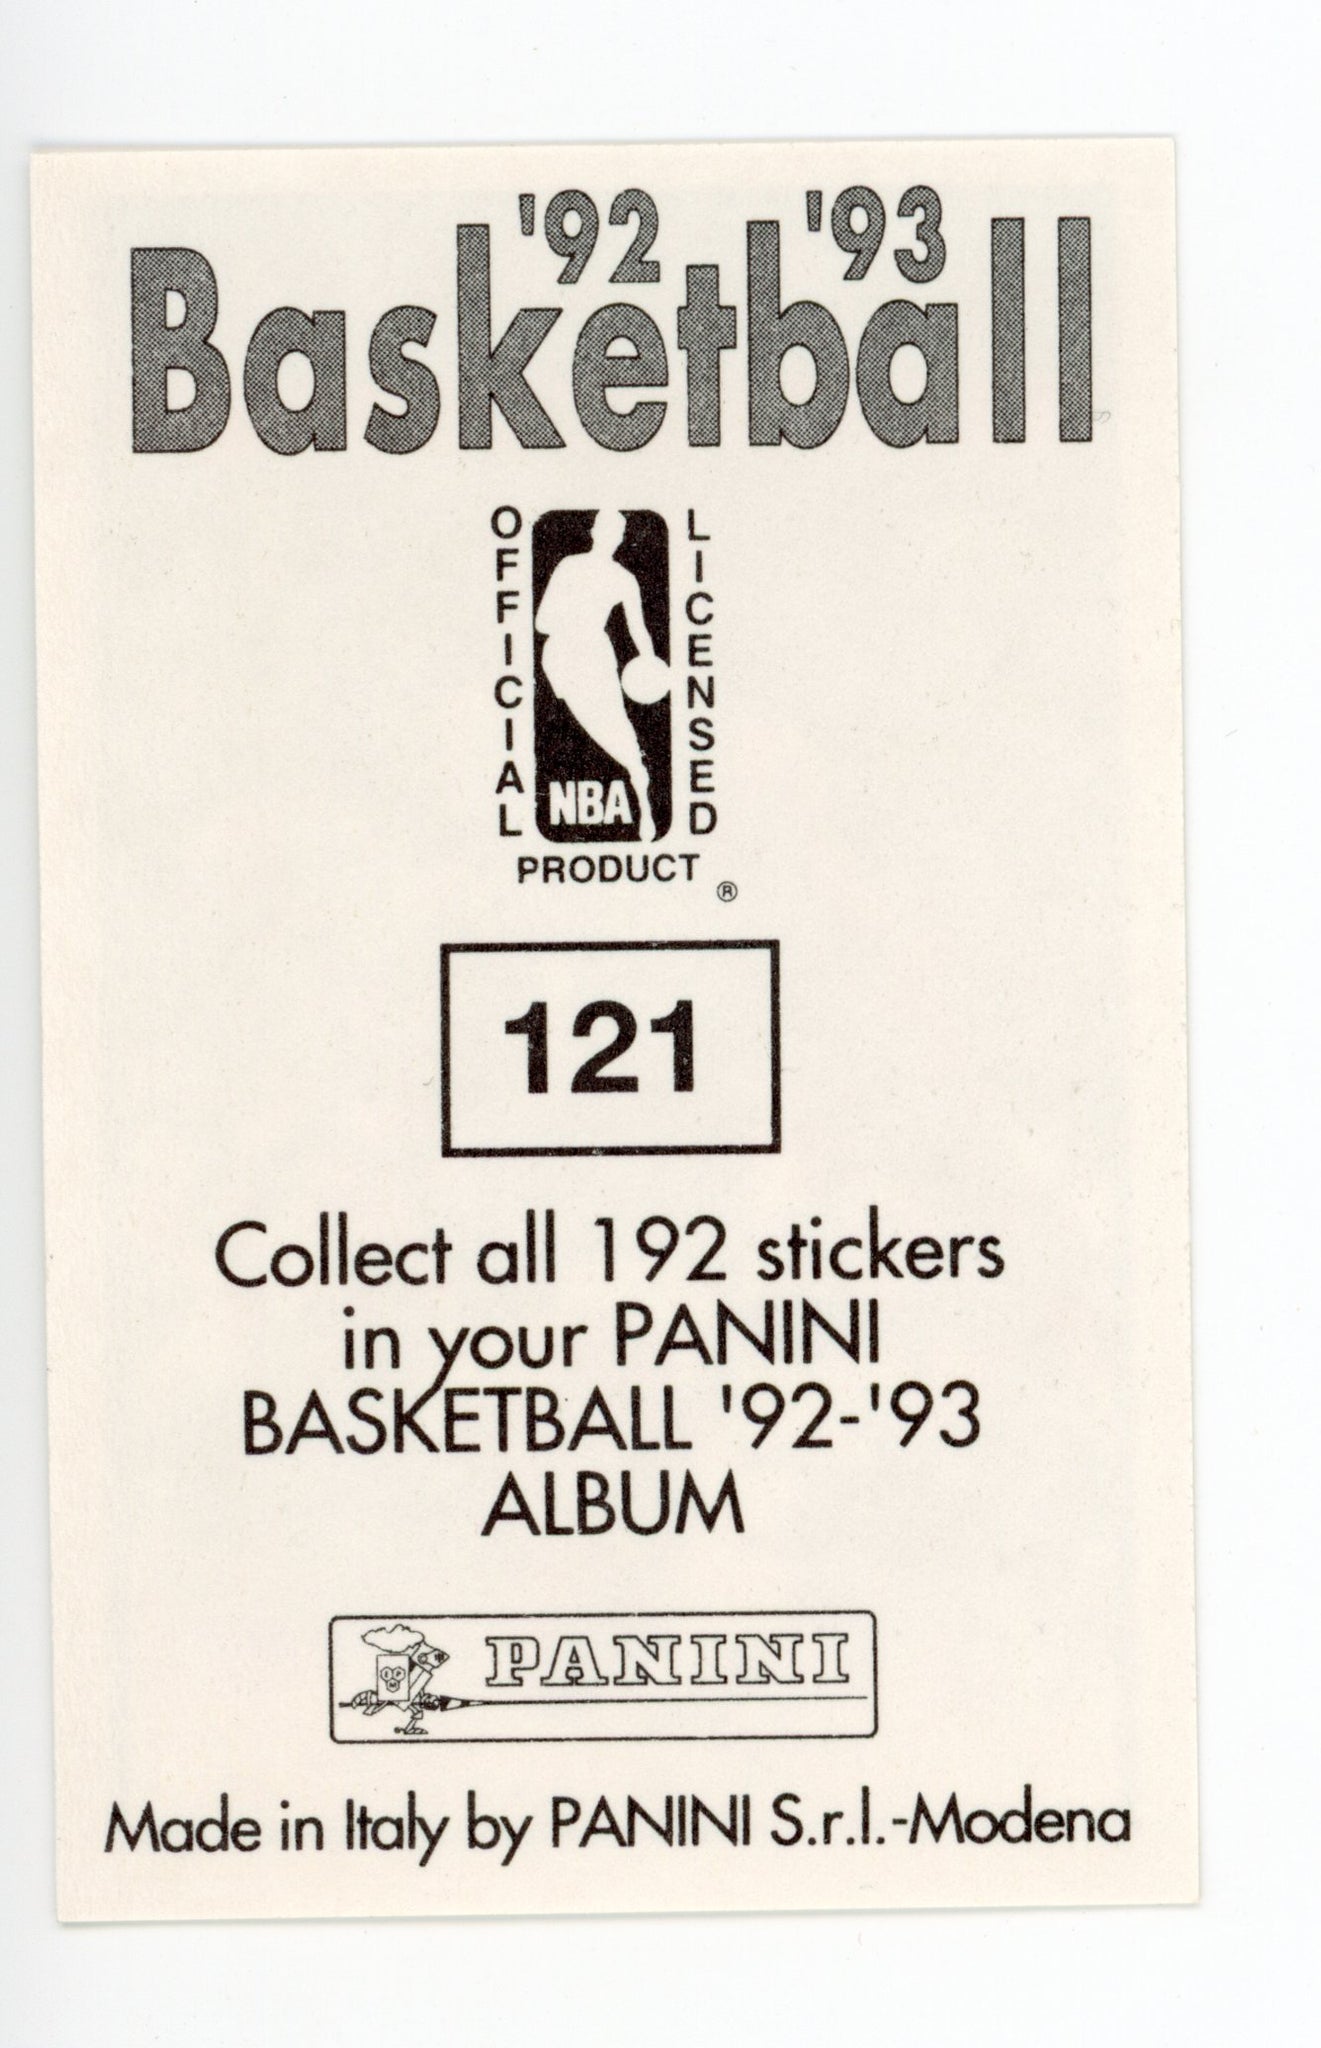 Tyrone Bogues Panini 1992-1993 Basketball Sticker Charlotte Hornets # 121